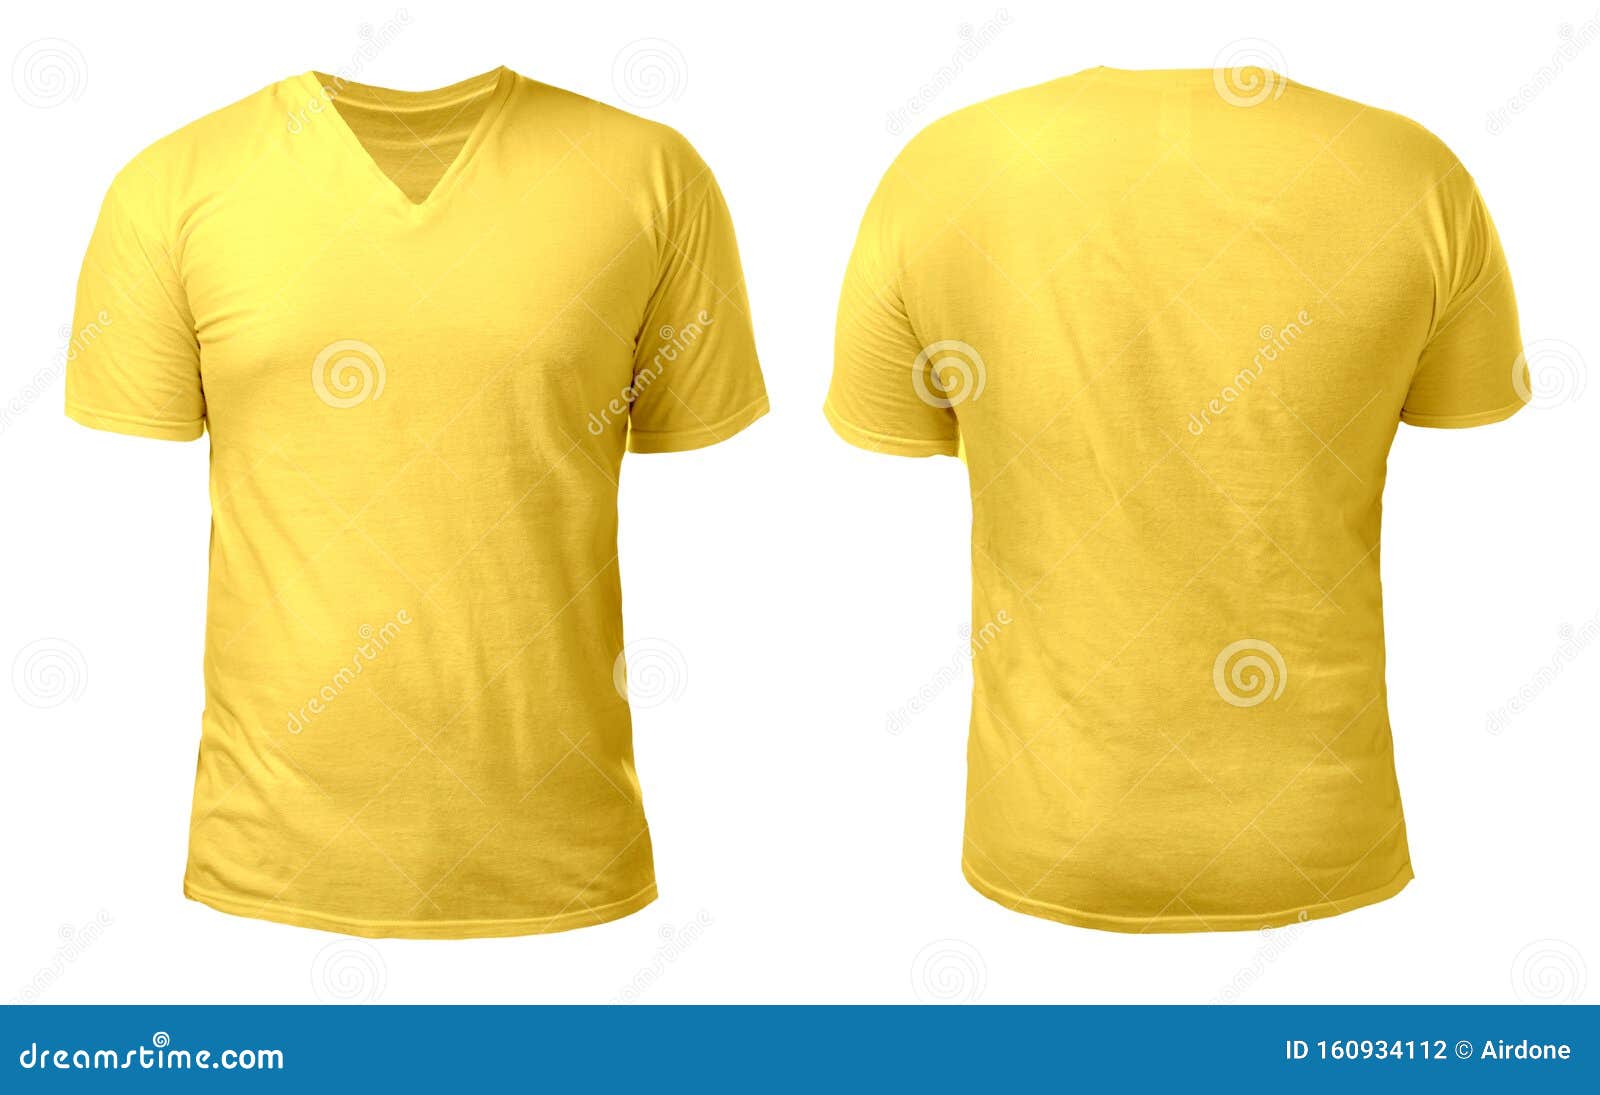 Download Download Women's V Neck T Shirt Mockup PSD - Free Download PSD Mockups Templates, Smart Object ...